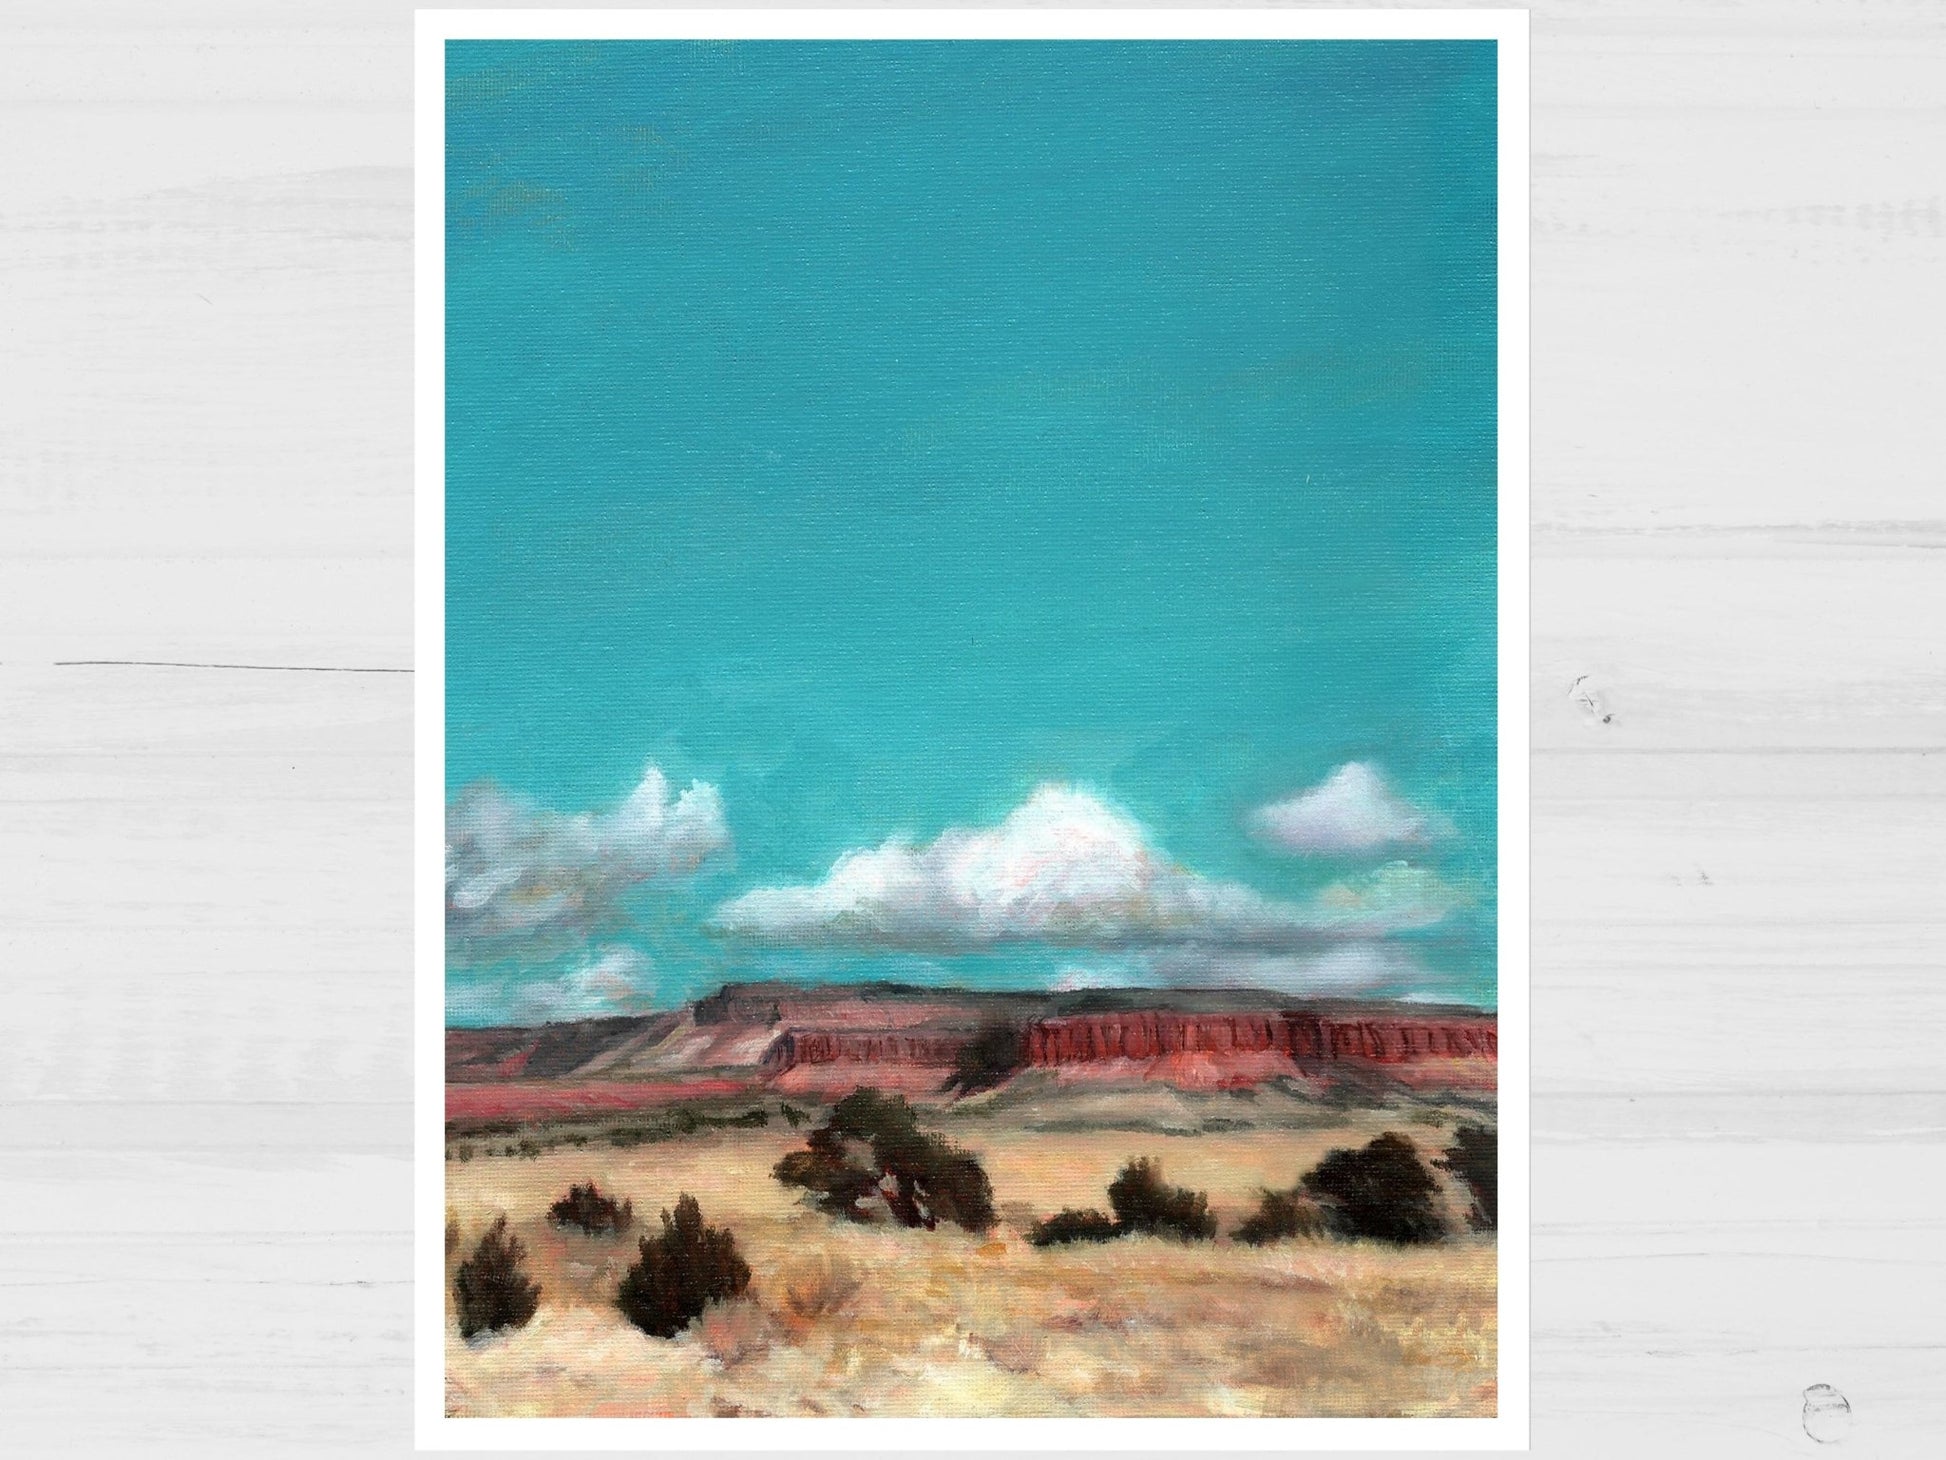 Thoreau New Mexico Landscape Art Print - Marissa Joyner Studio